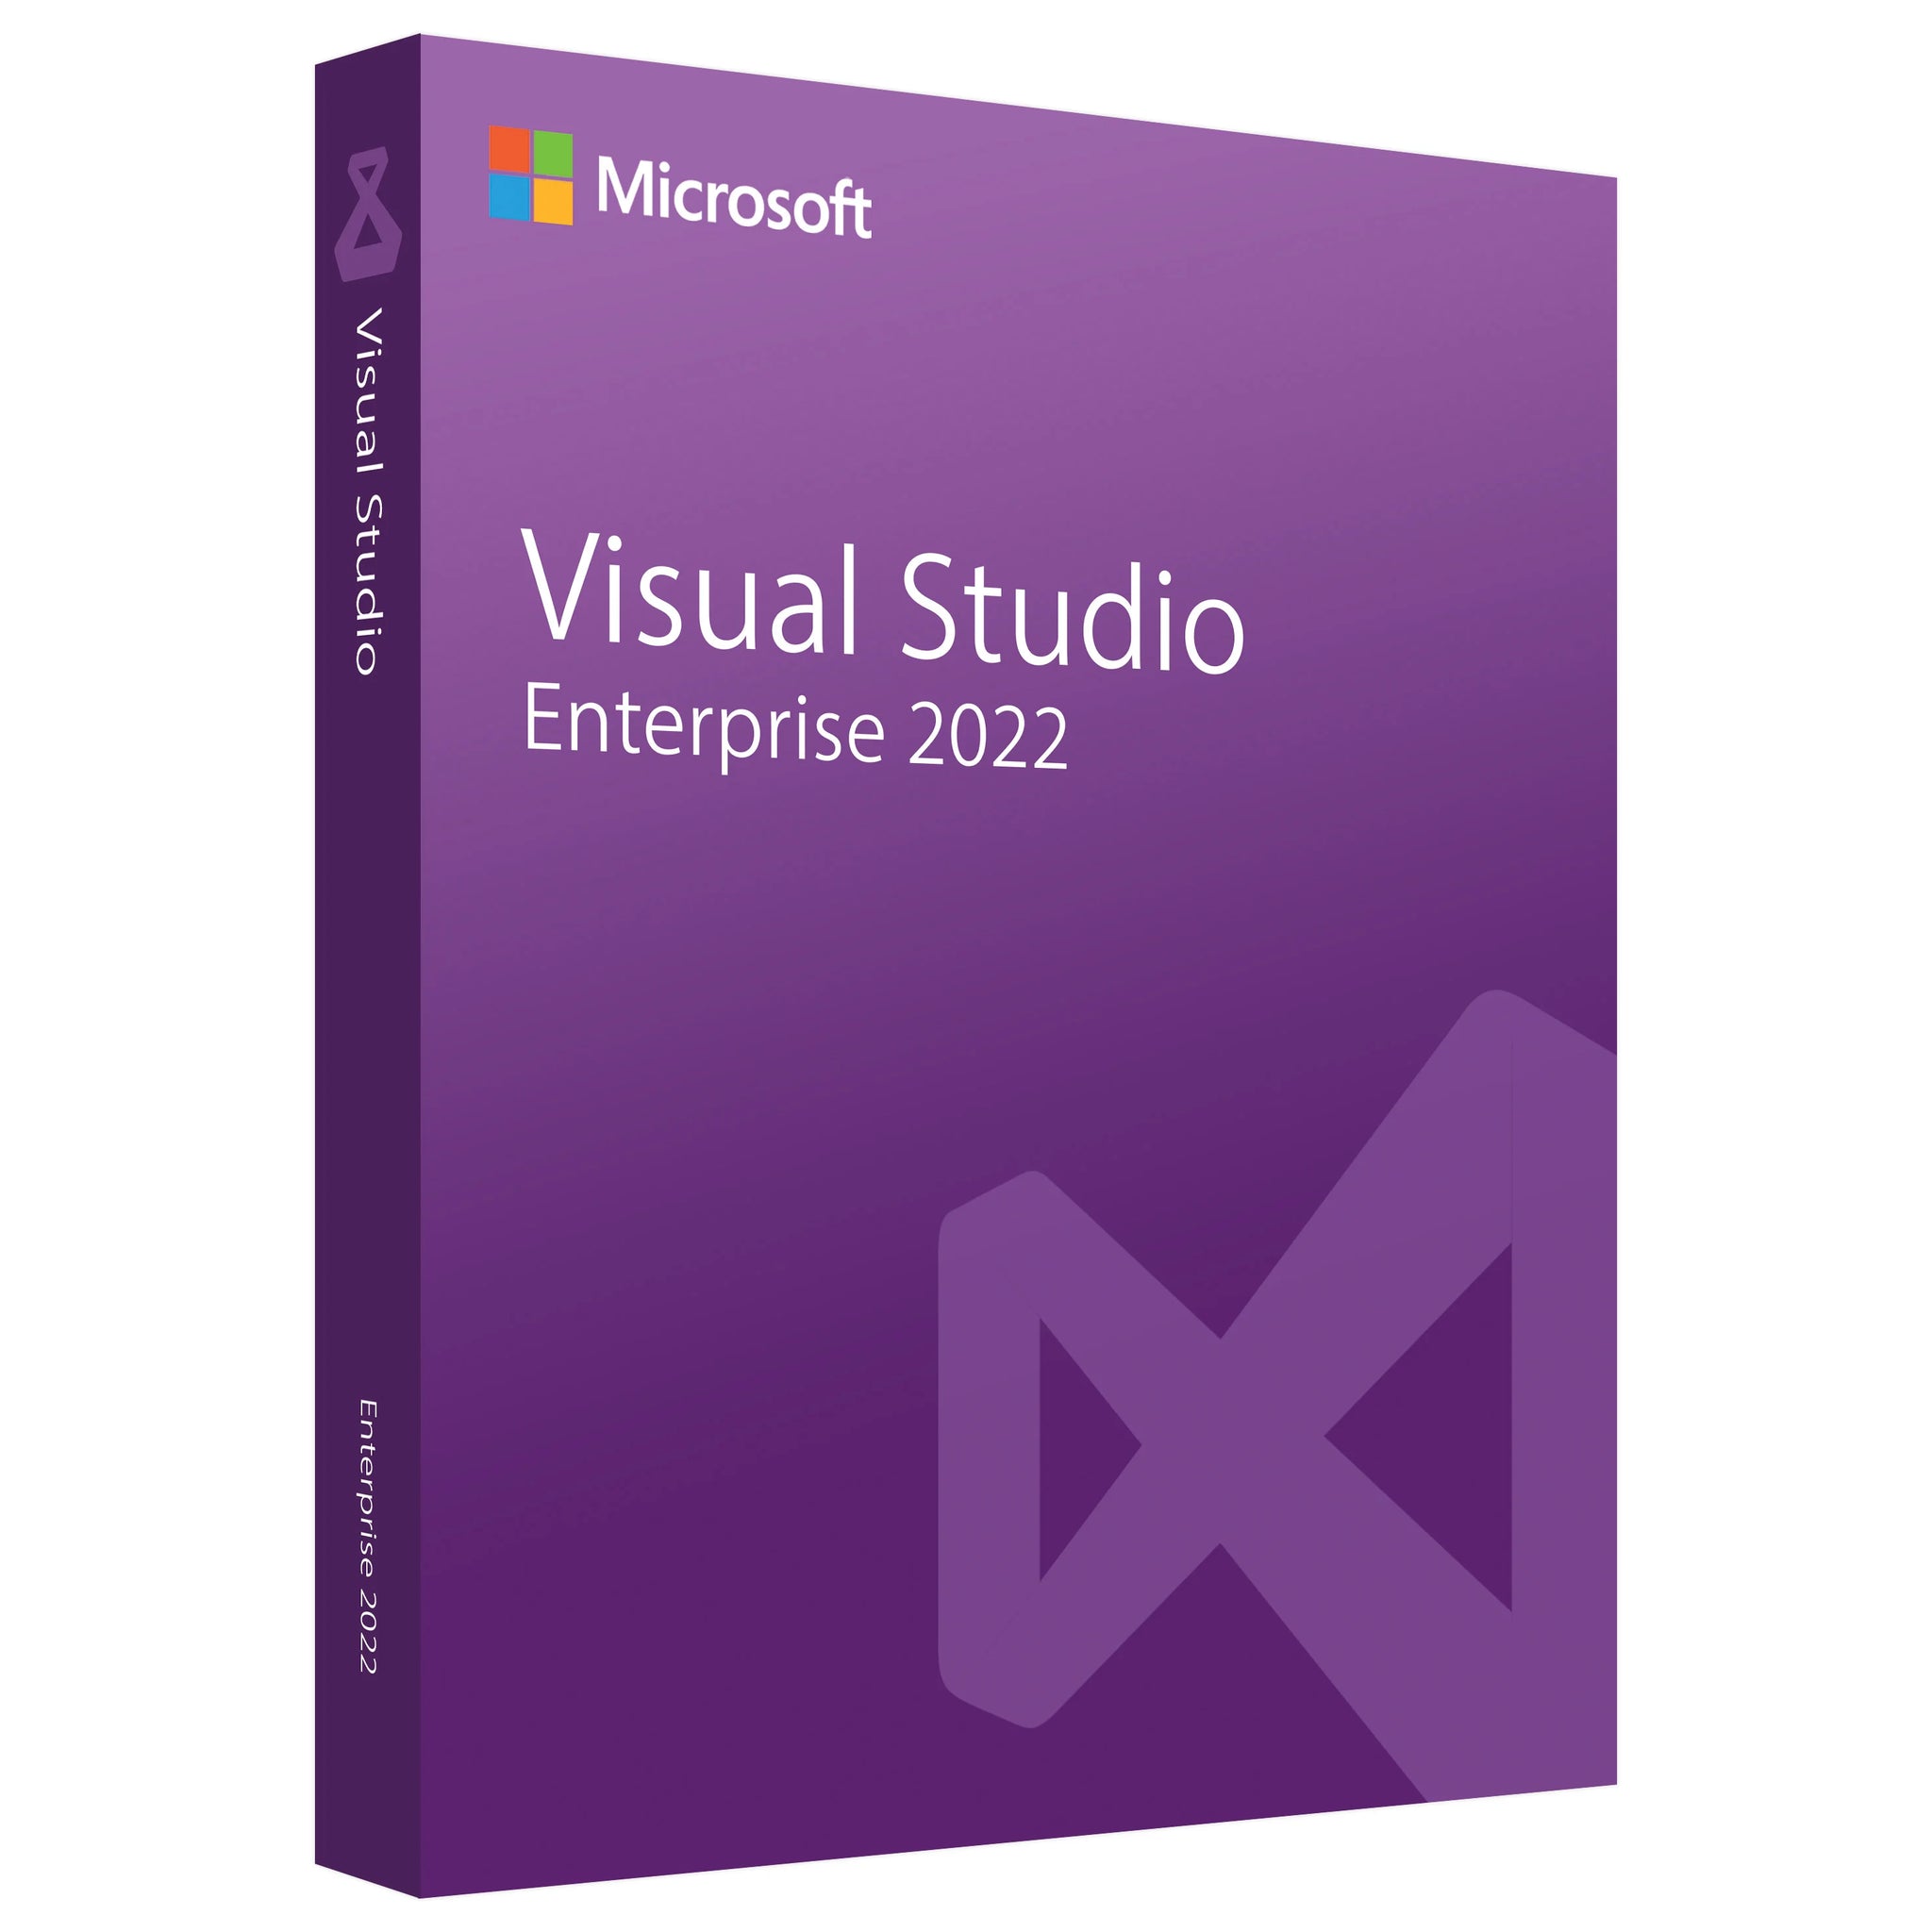 Microsoft Visual Studio 2022 Enterprise- Lifetime License Key